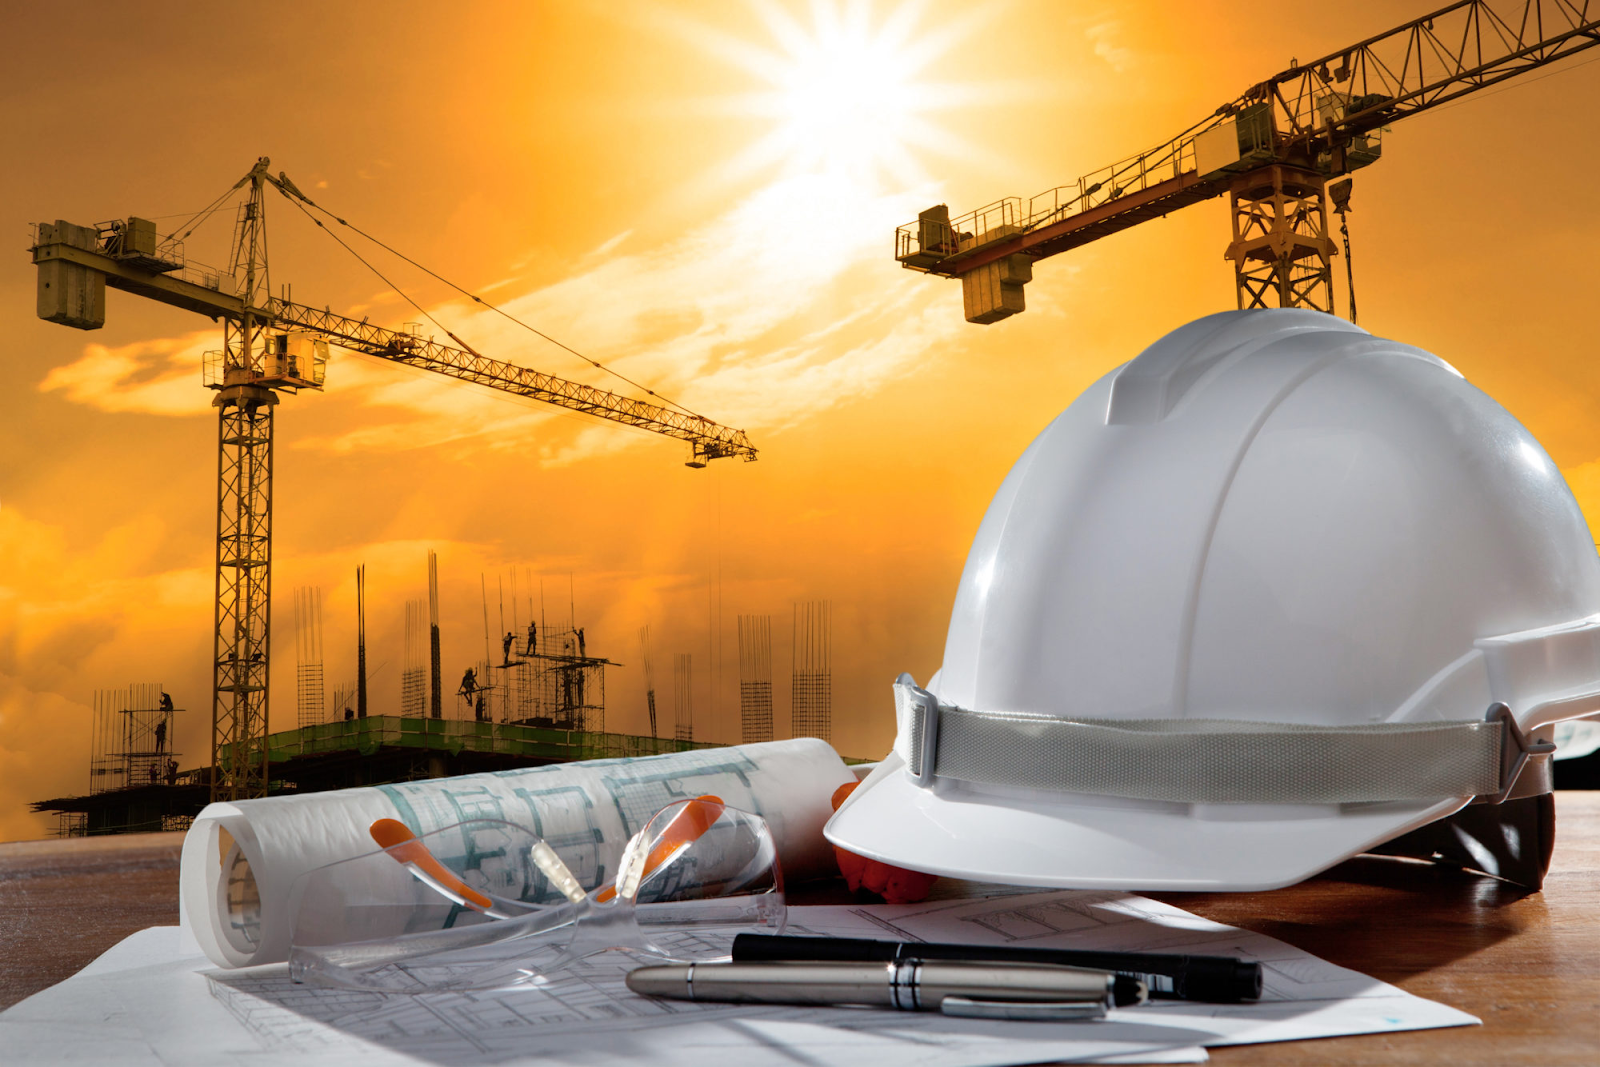 Construction Industry Facing a Tenacious Labor Shortage, Along with Rising Labor Costs